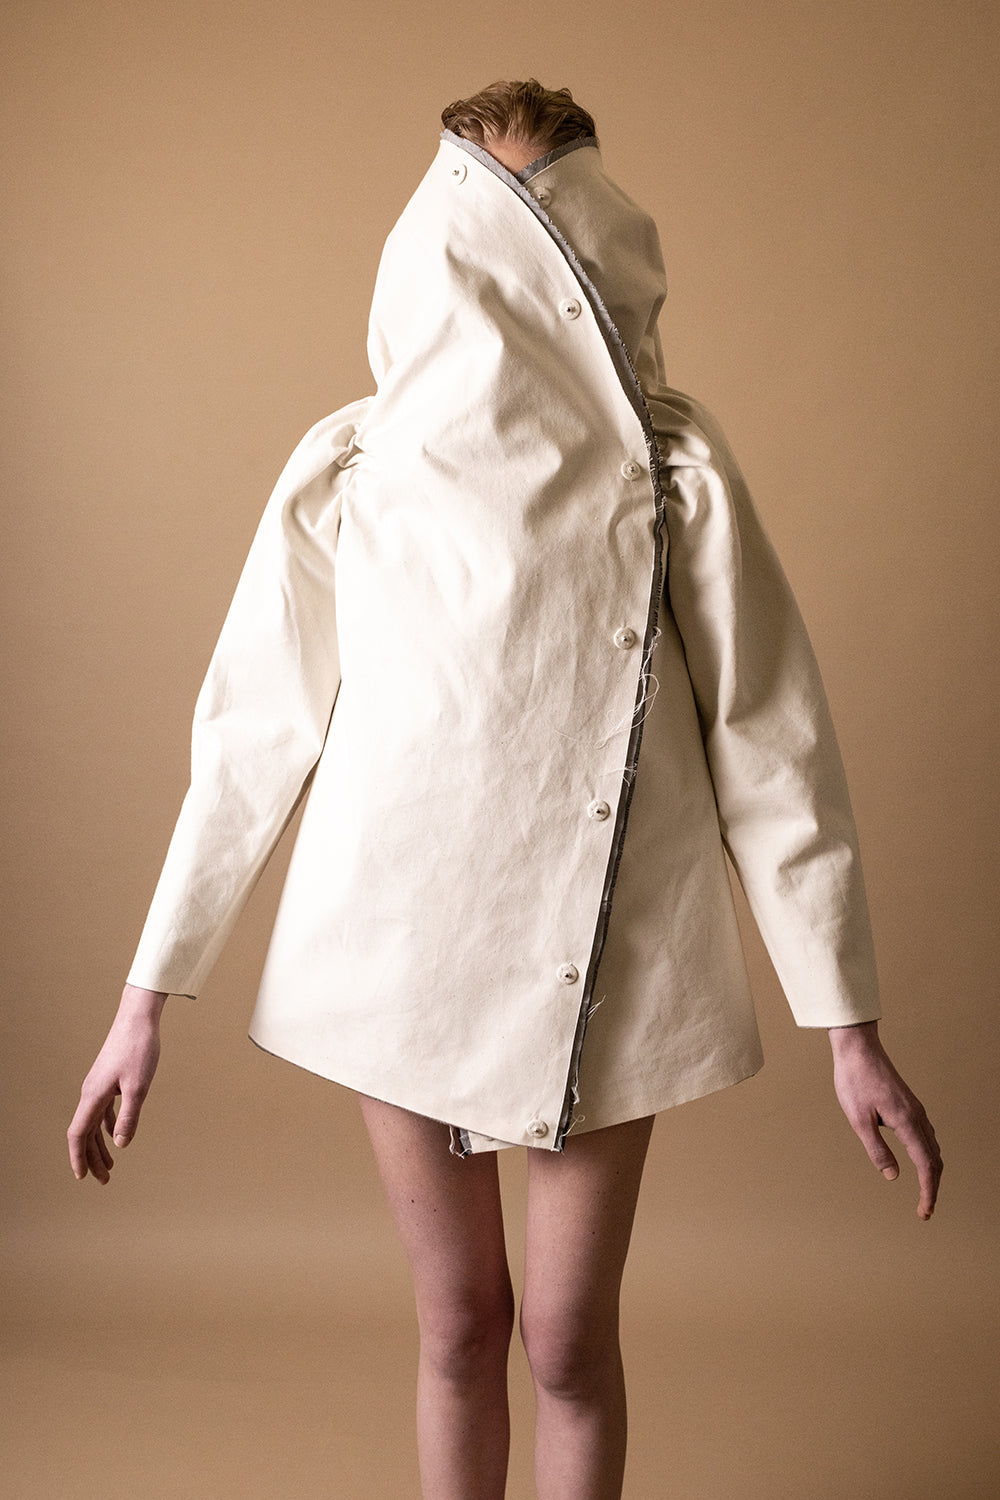 SURROGATE 3-Way Transforming Piece: Jacket / Dress / Top - DZHUS - The Clothing Lounge